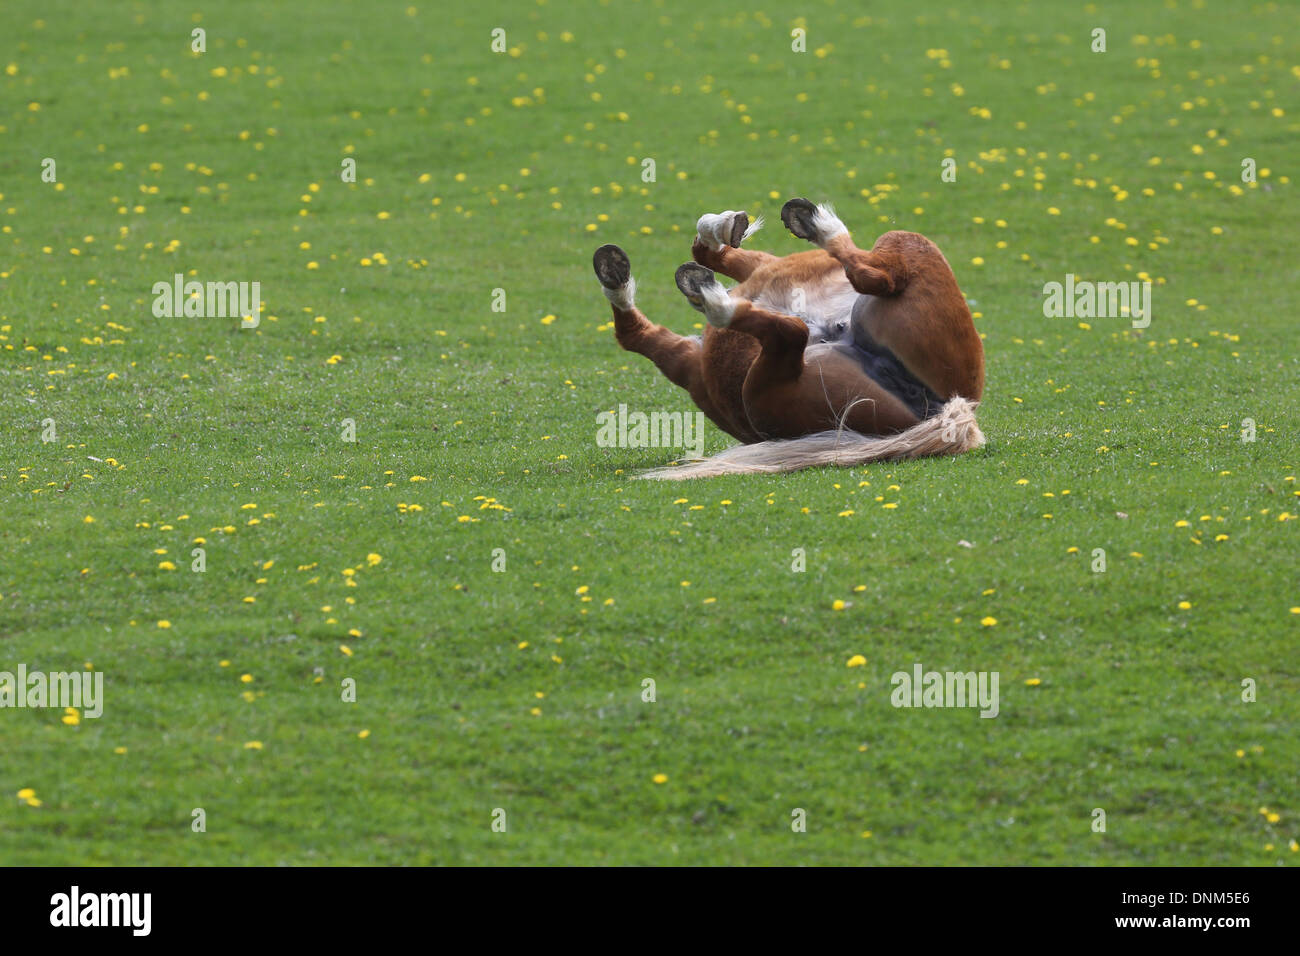 Prangender Dorf, Deutschland, Pferd in den Rasen Walzen Stockfoto